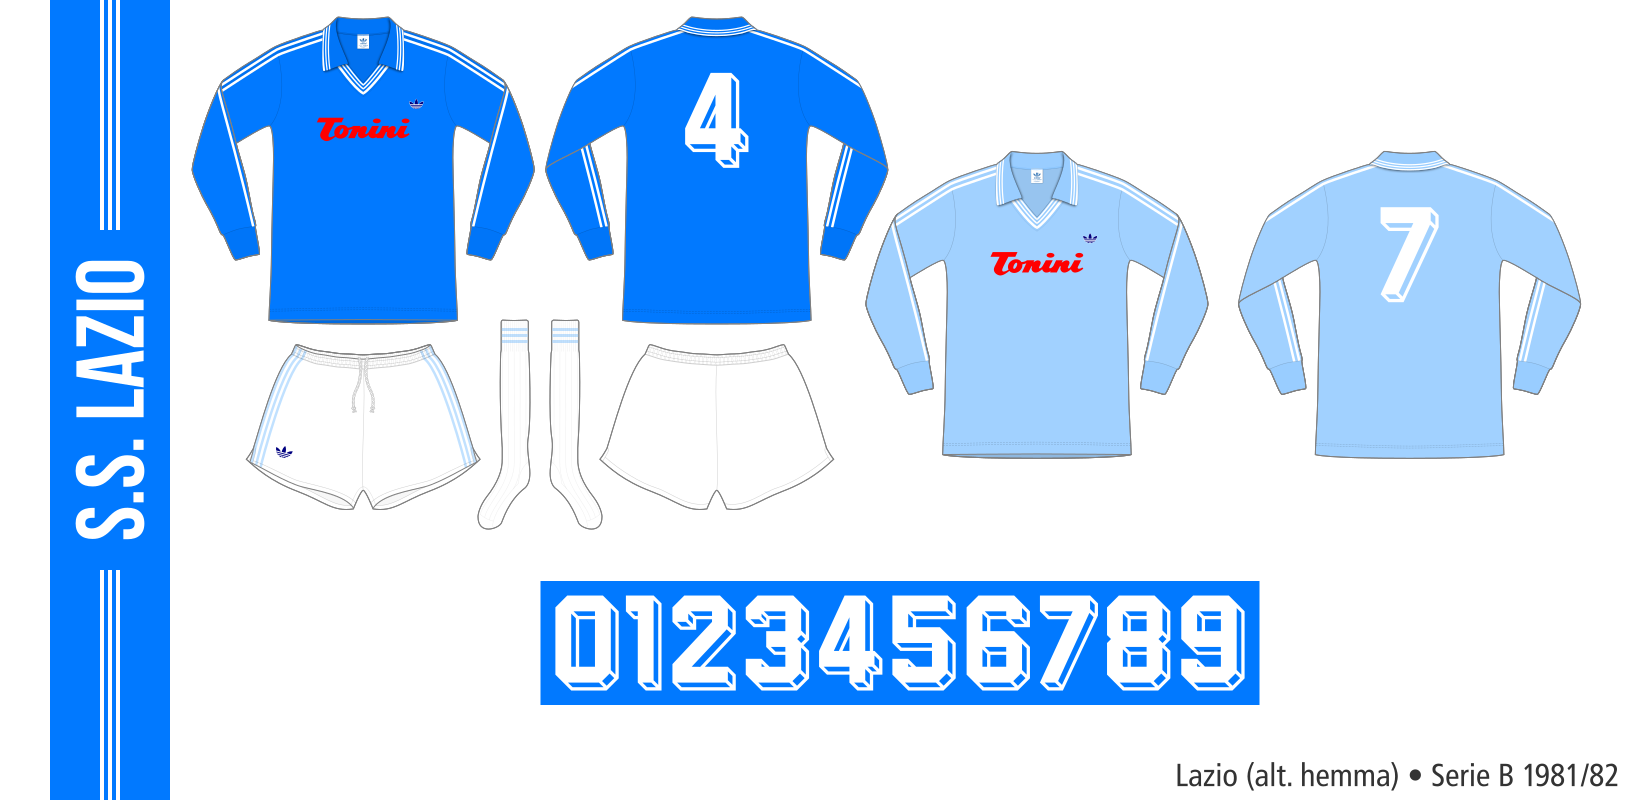 Lazio 1981/82 (alternativ hemma)